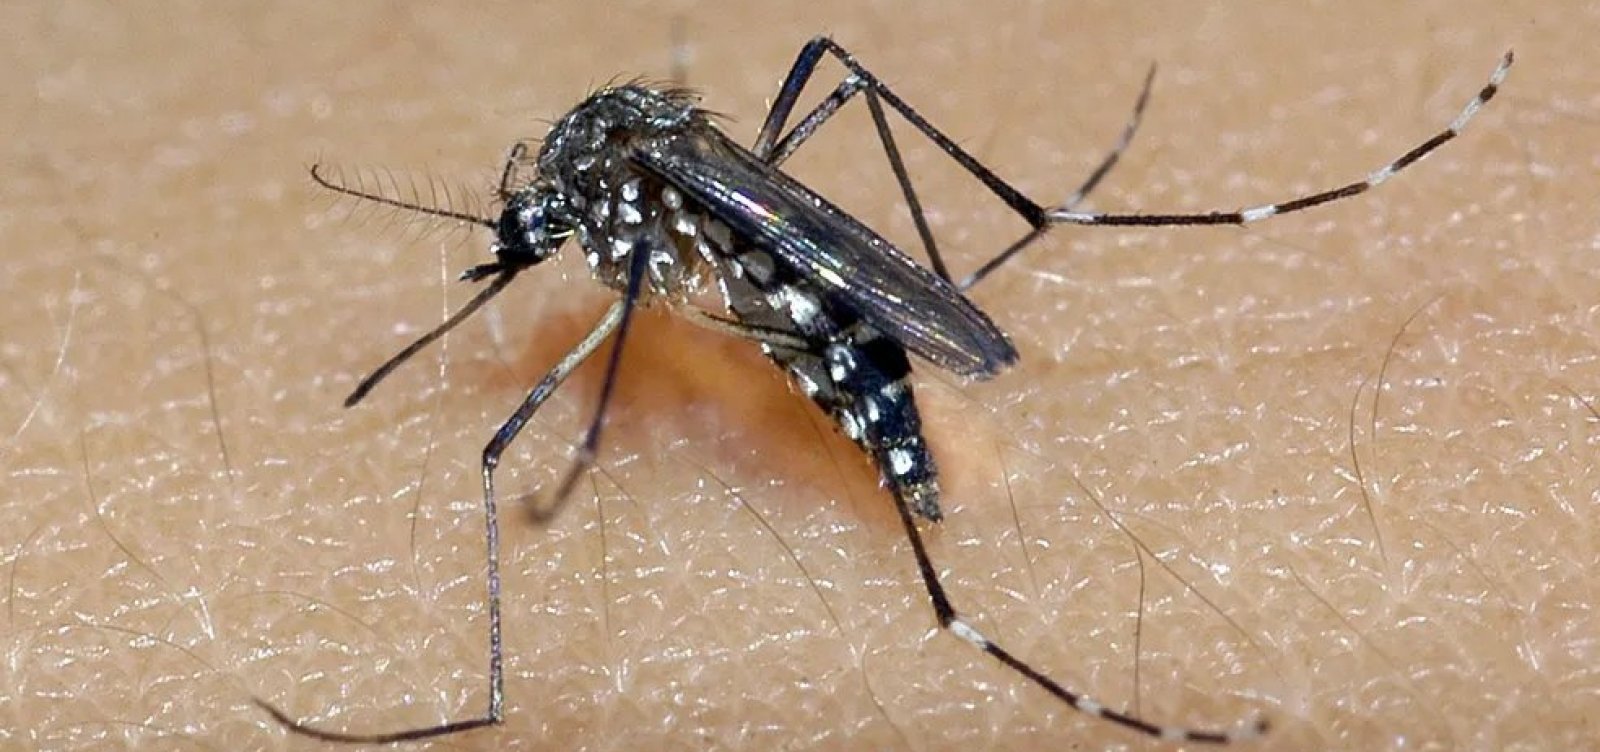 Número de mortes por dengue na Bahia sobe para 64